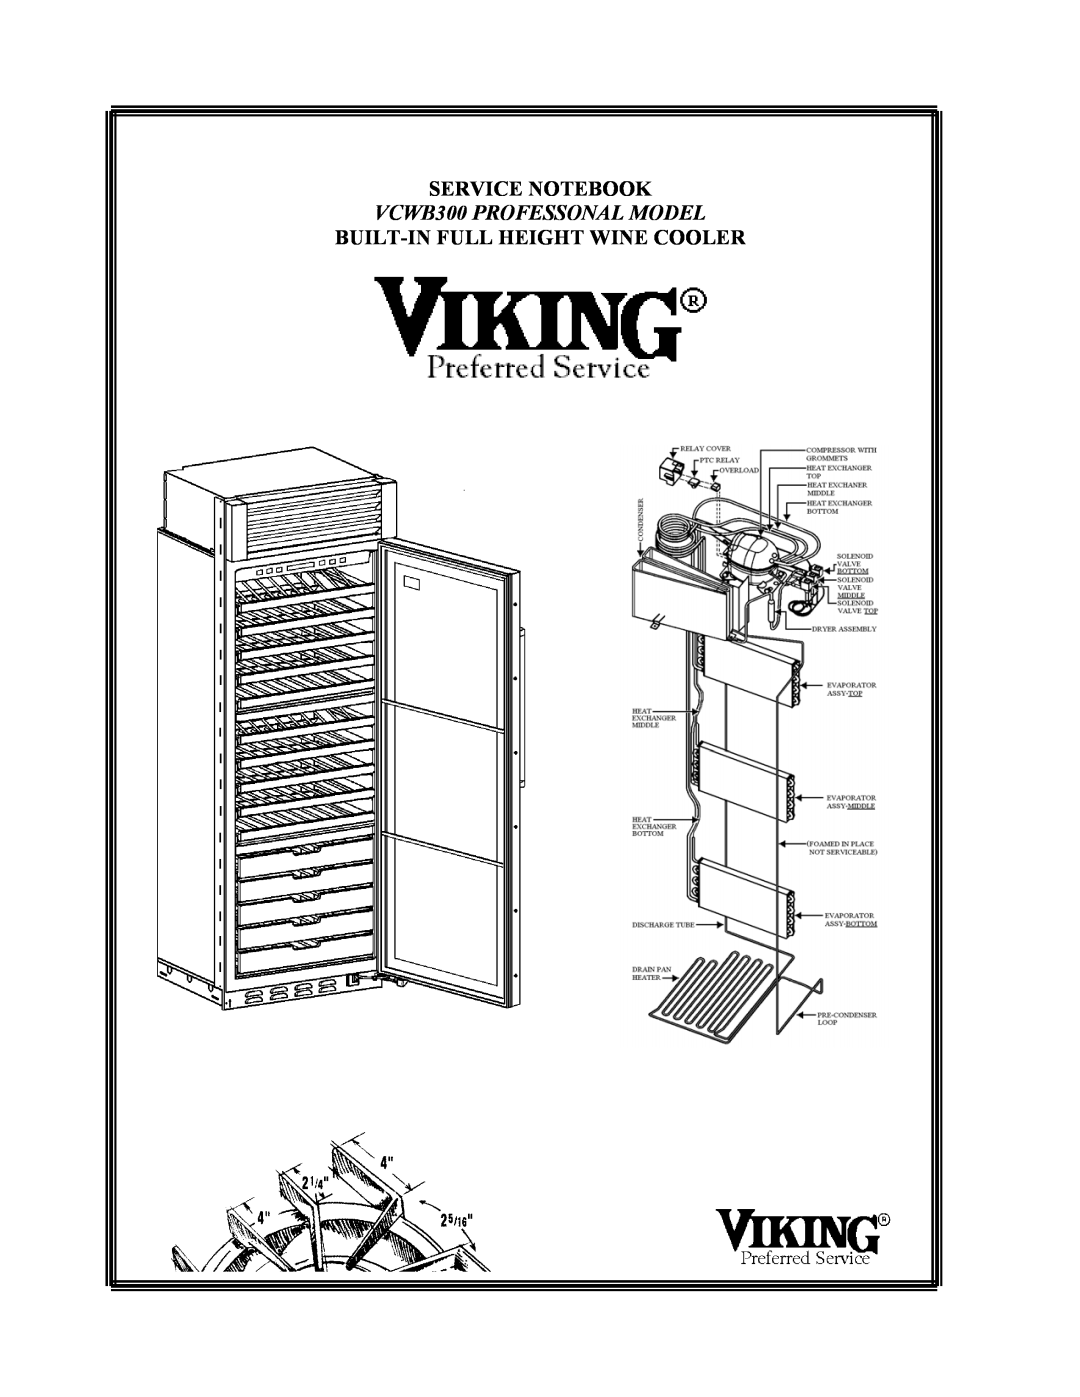 Viking manual Service Notebook, VCWB300 PROFESSONAL MODEL, Built-Infull Height Wine Cooler 